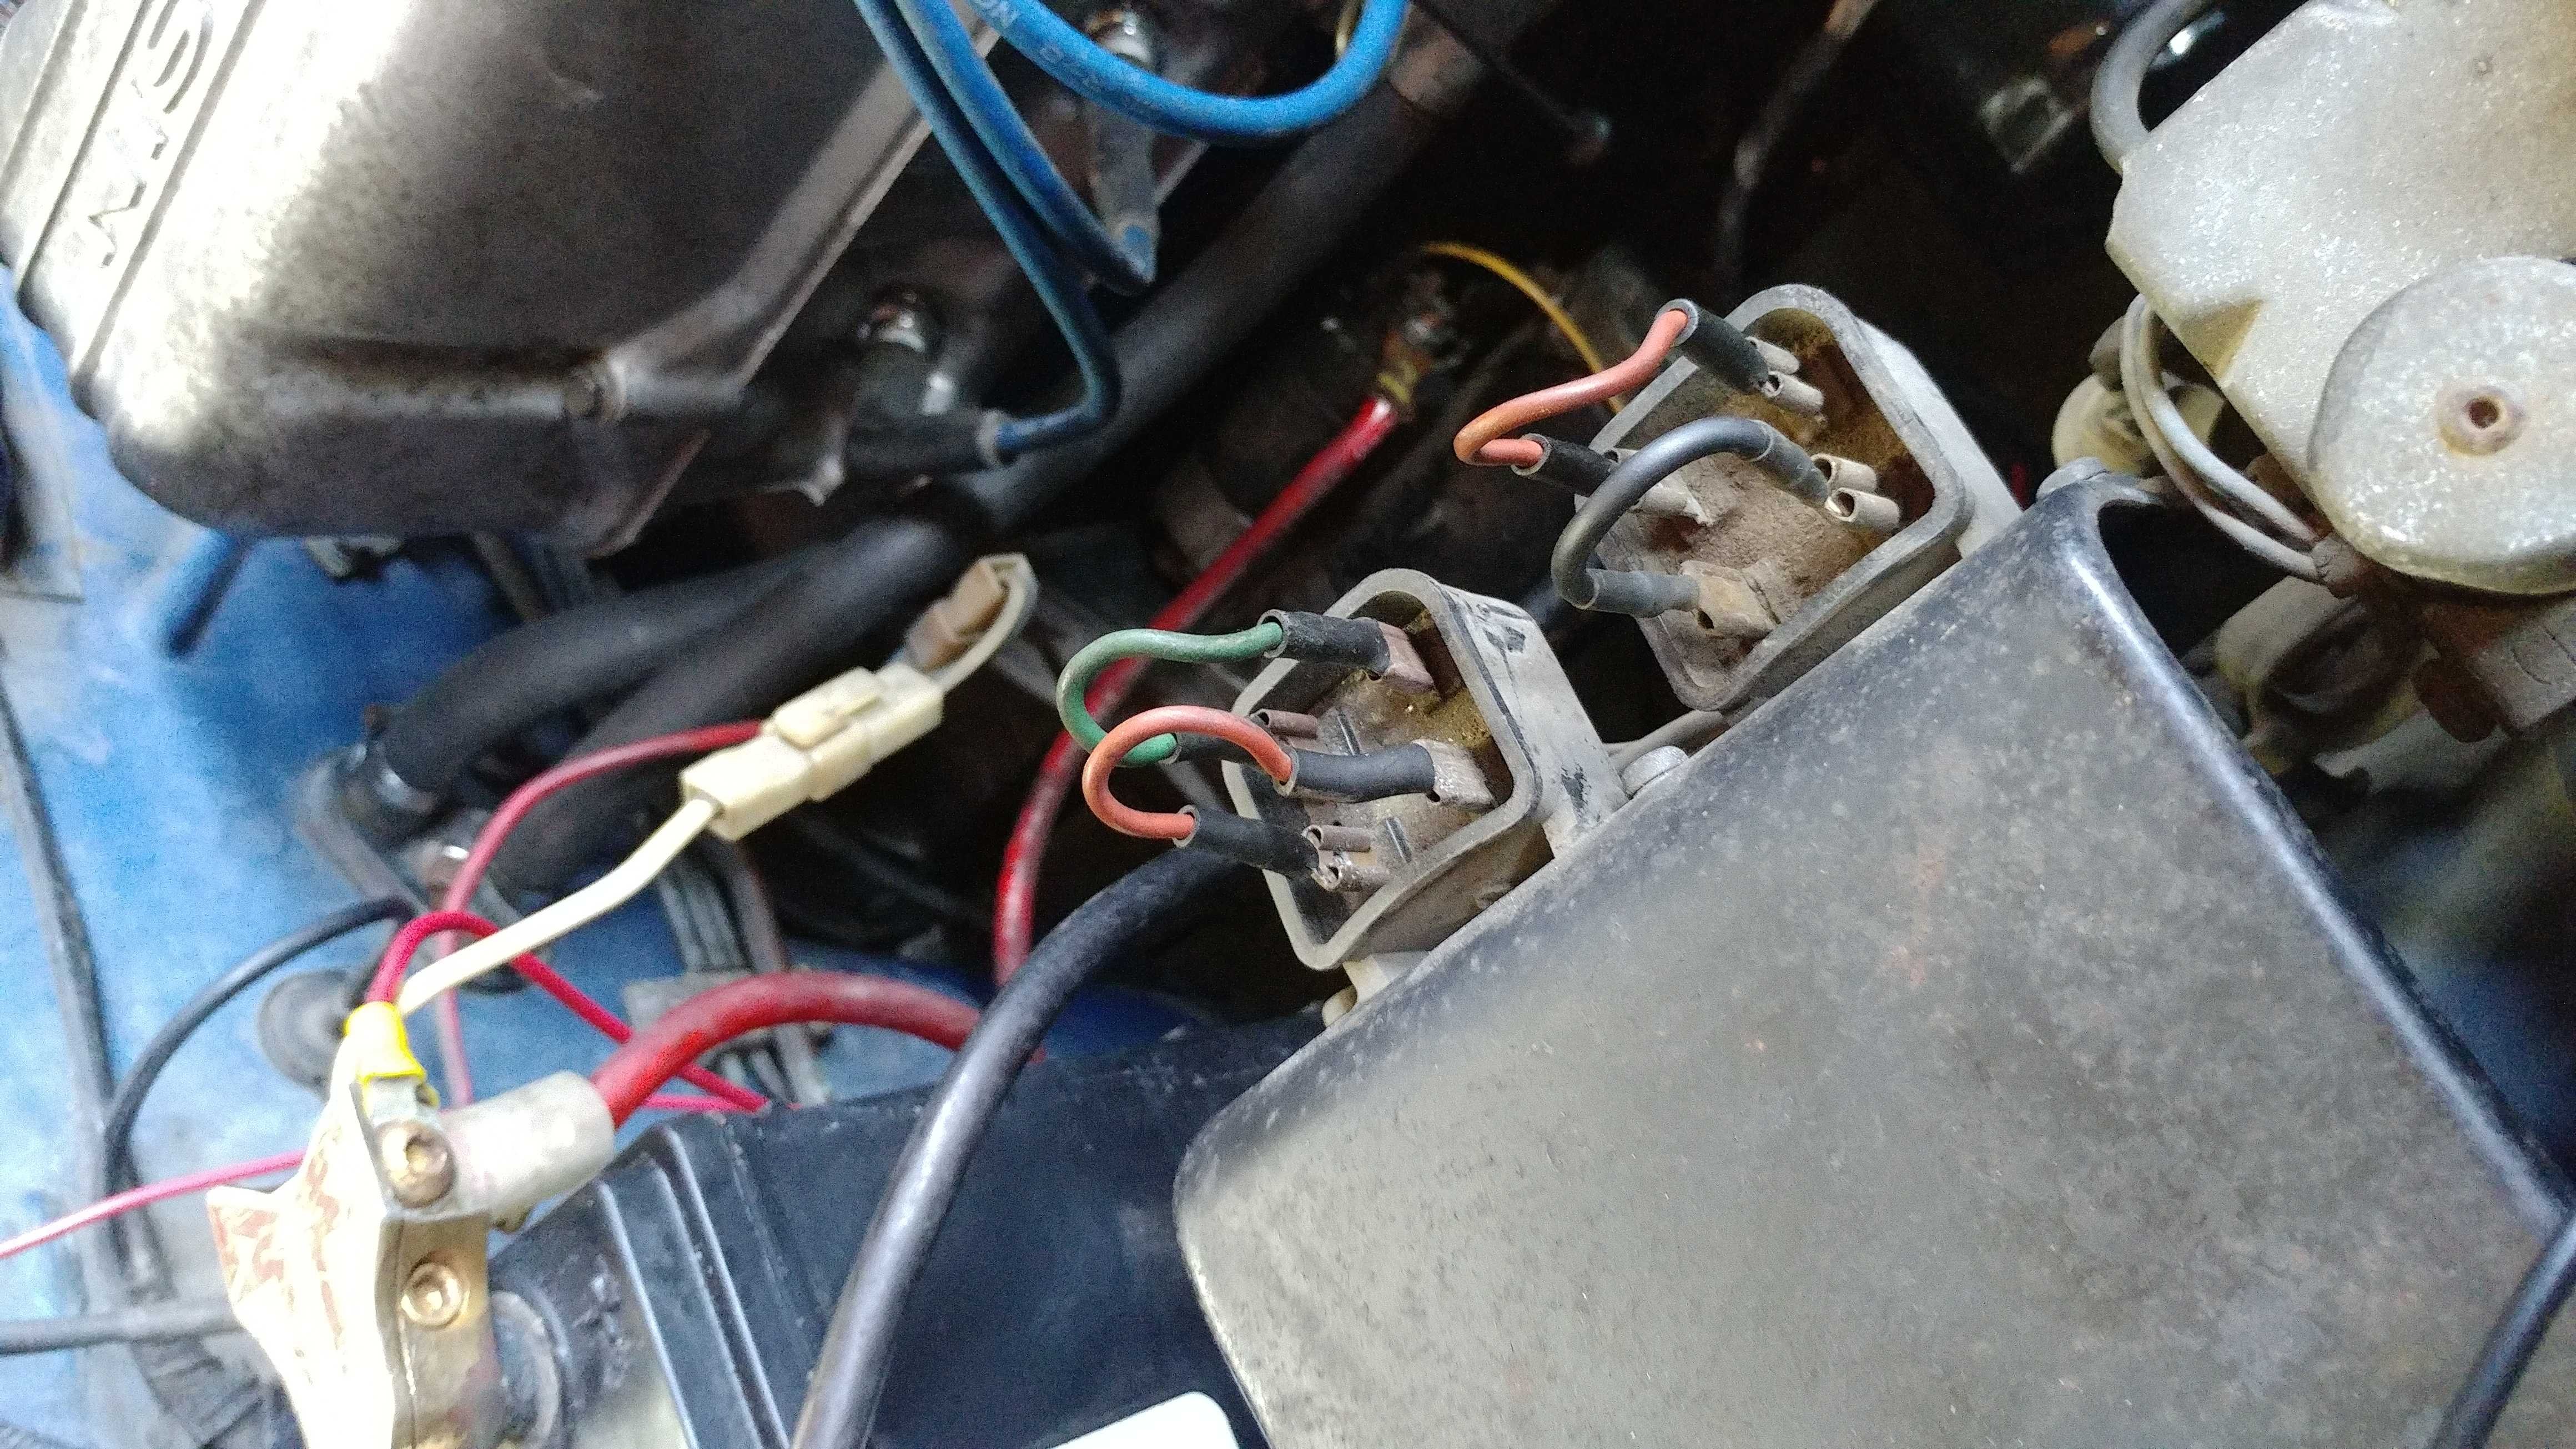 280z wiring problems - Electrical - The Classic Zcar Club